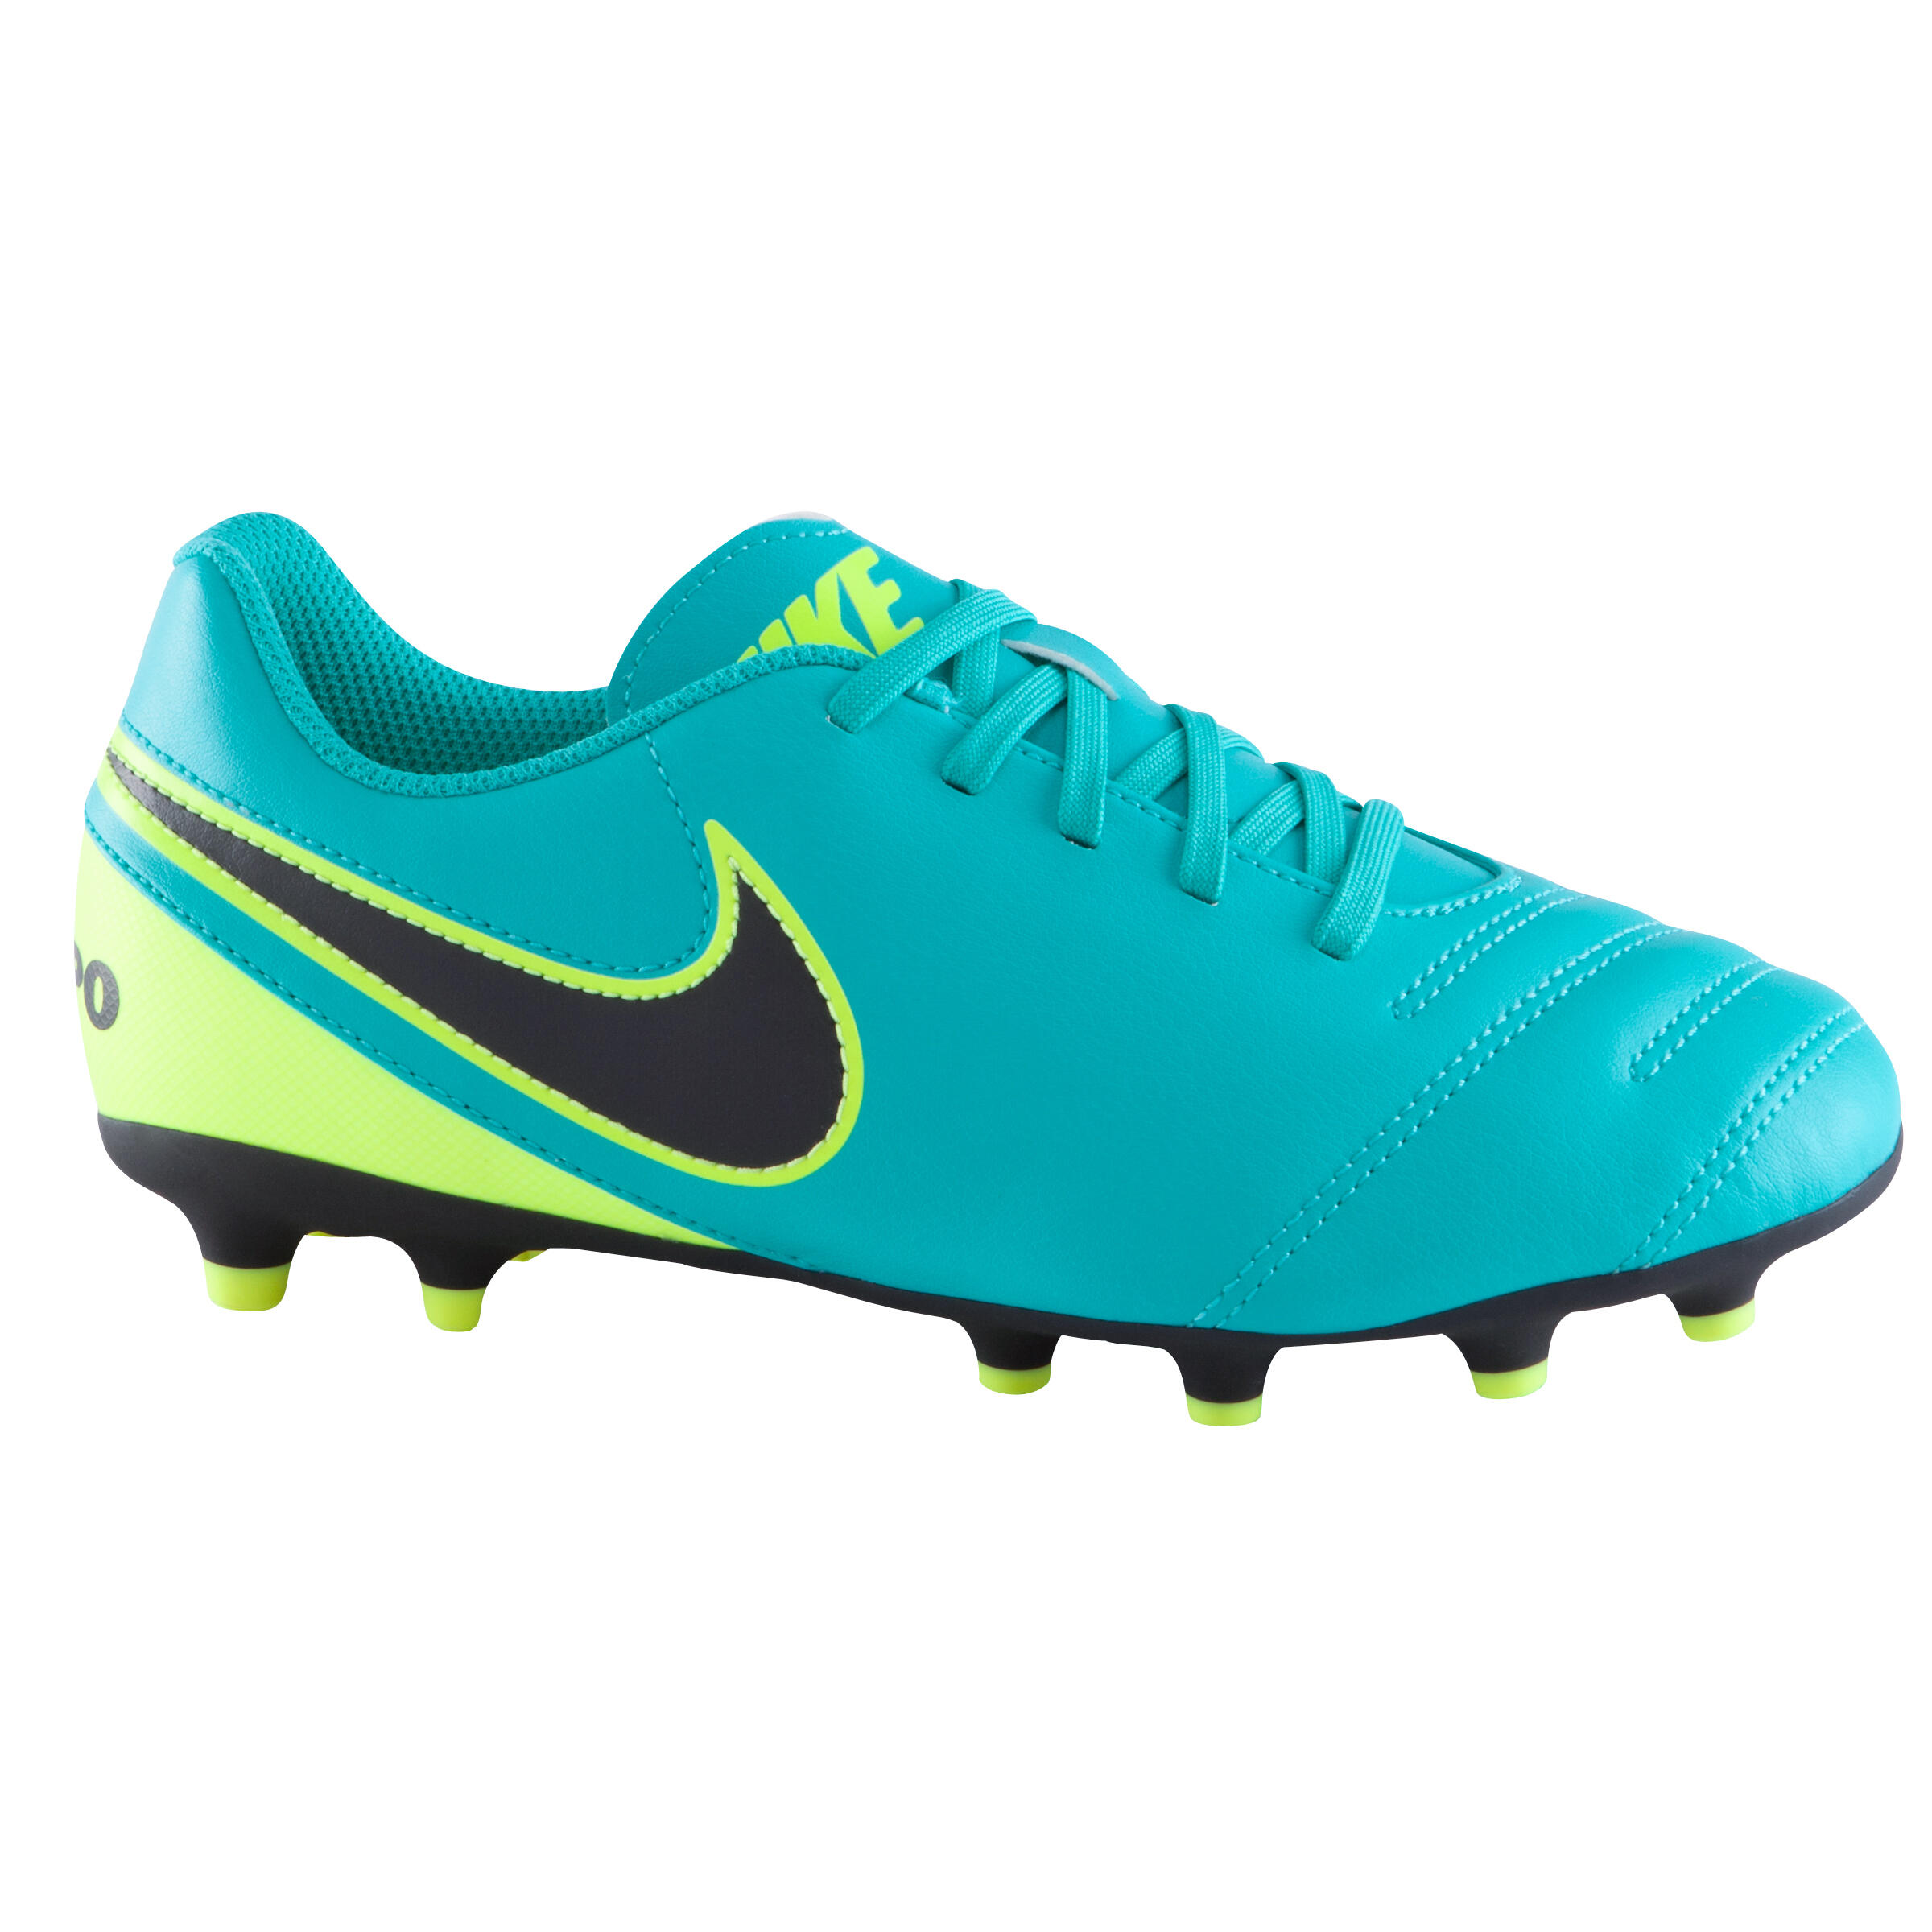 Tiempo Rio FG Junior Football Boots - Green 1/14